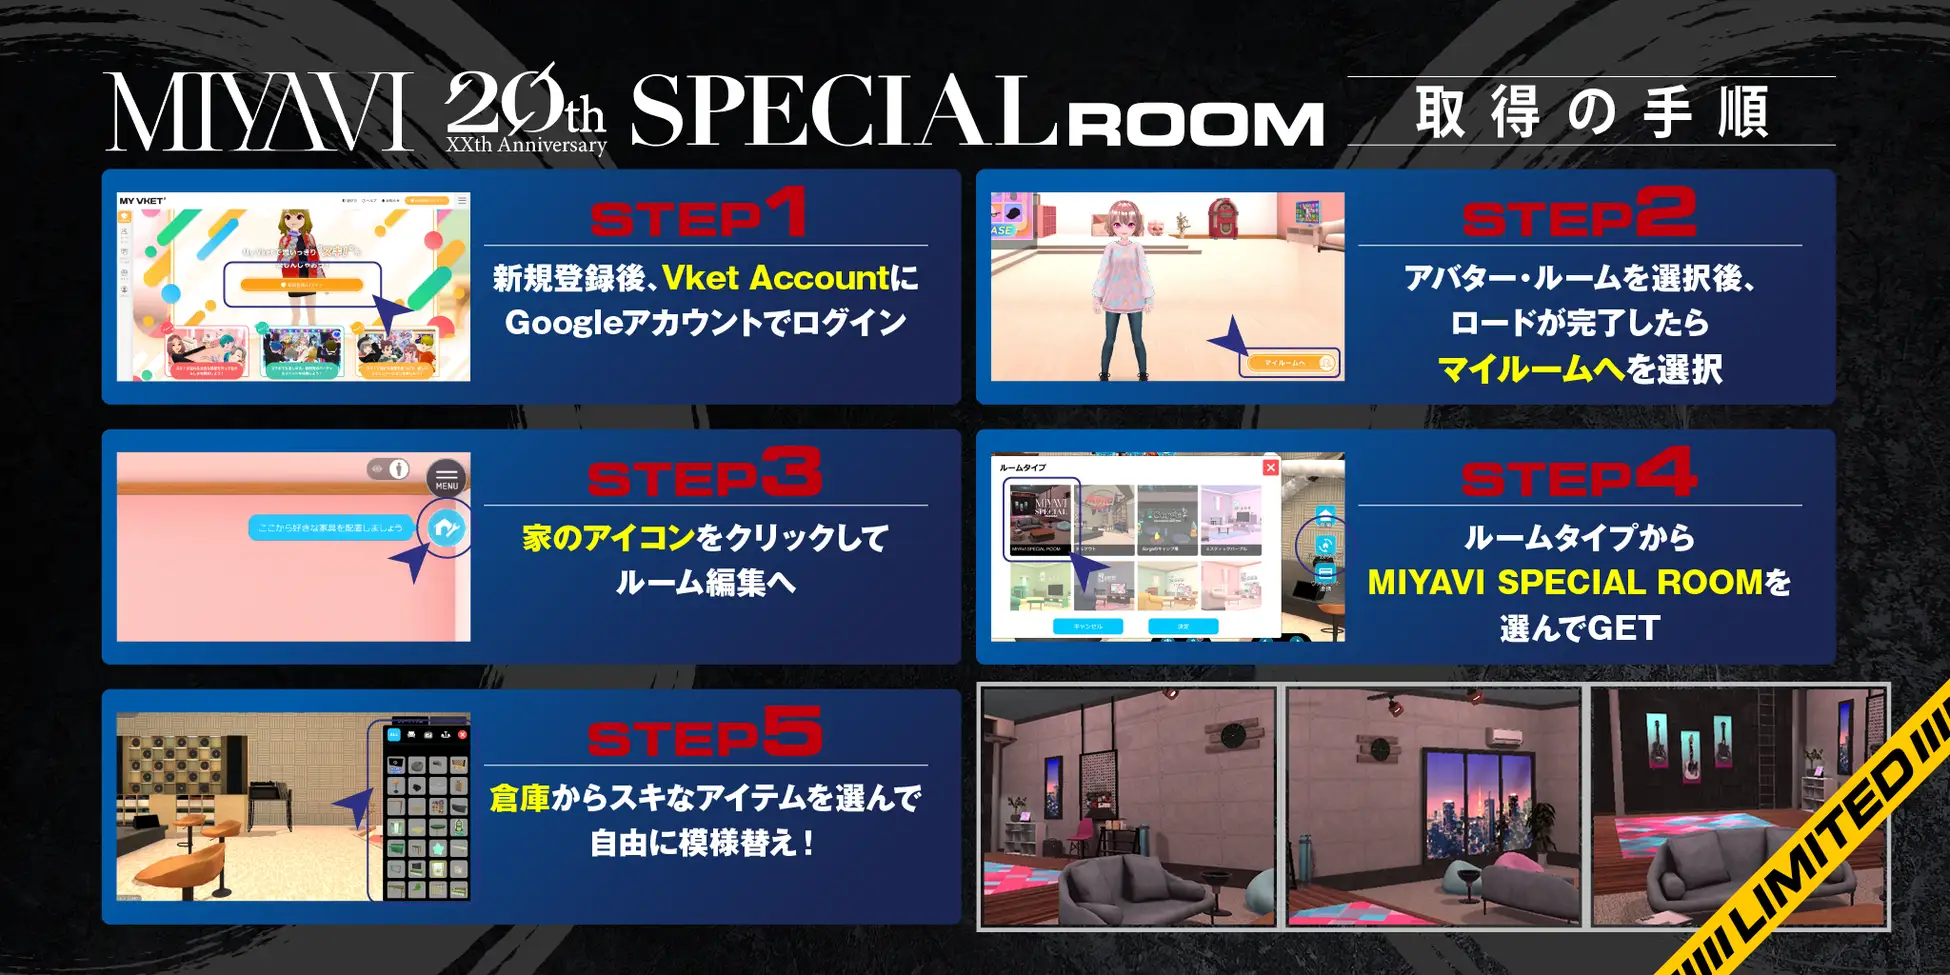 Miyavi Decor Room